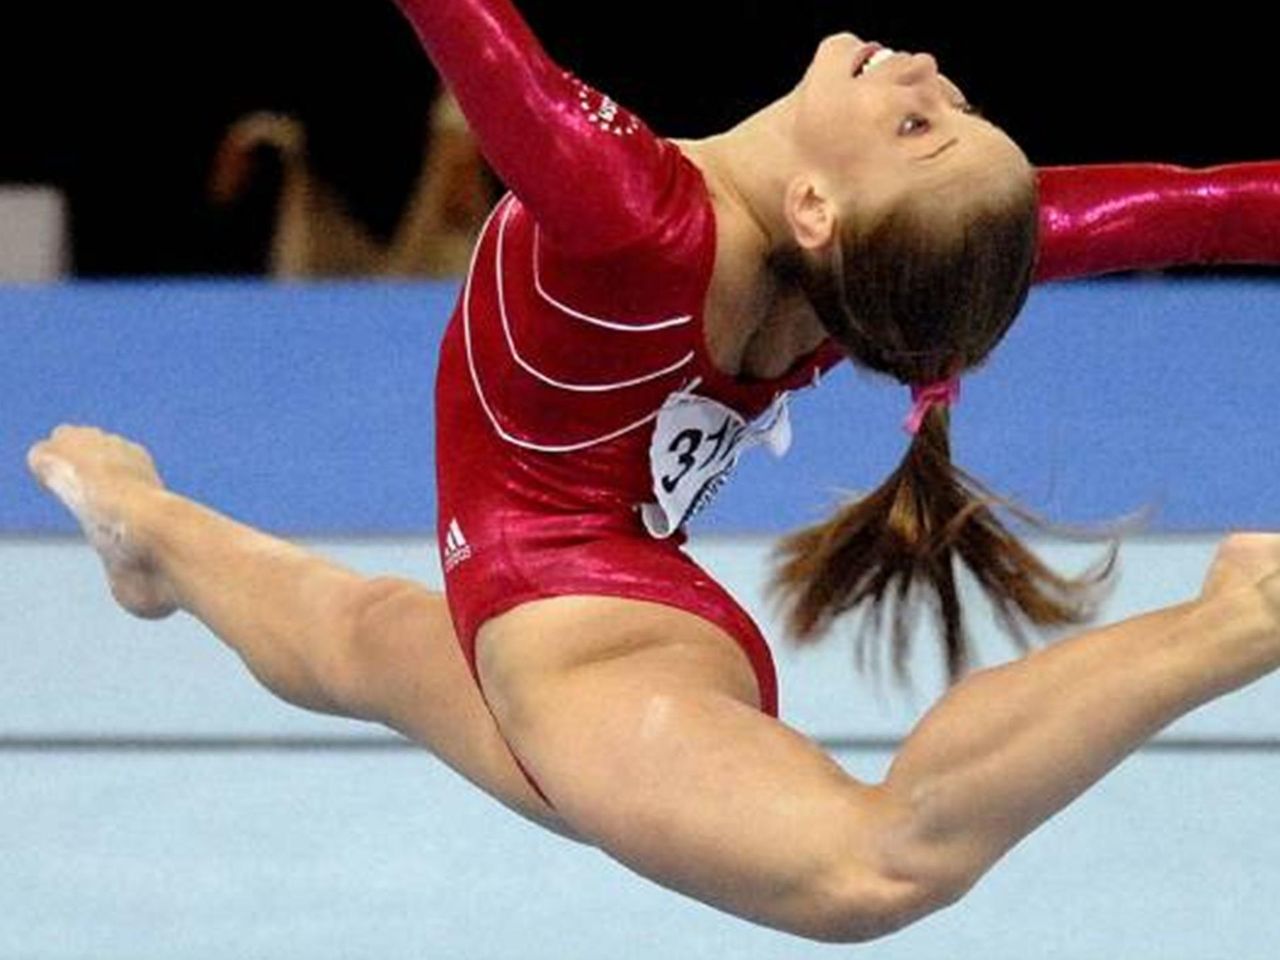 gymnast wardrobe malfunction floor routine - felipeberontatt.com.